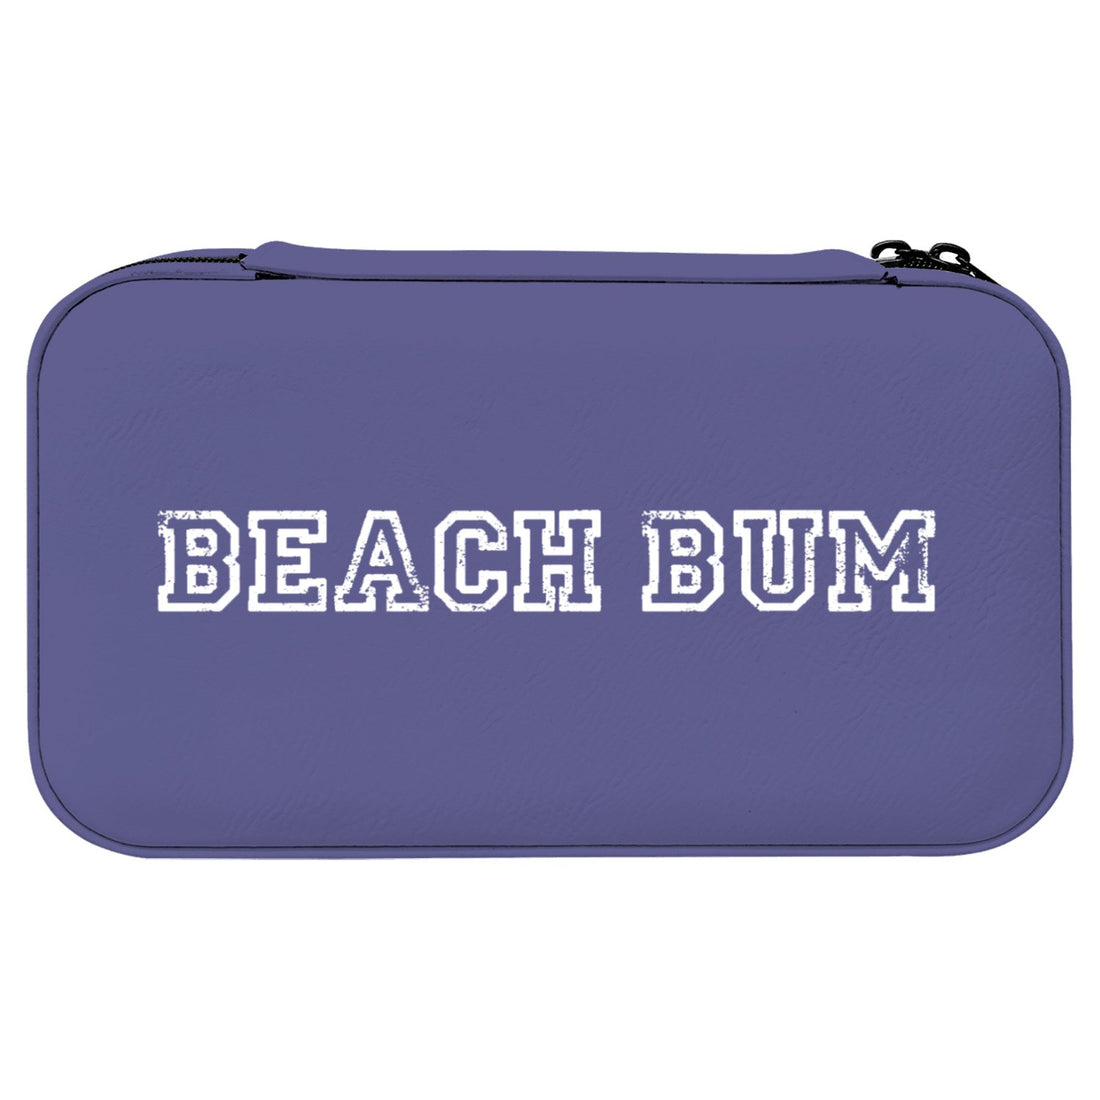 Beach Bum Jewelry Organizer - Positively Sassy - Beach Bum Jewelry Organizer